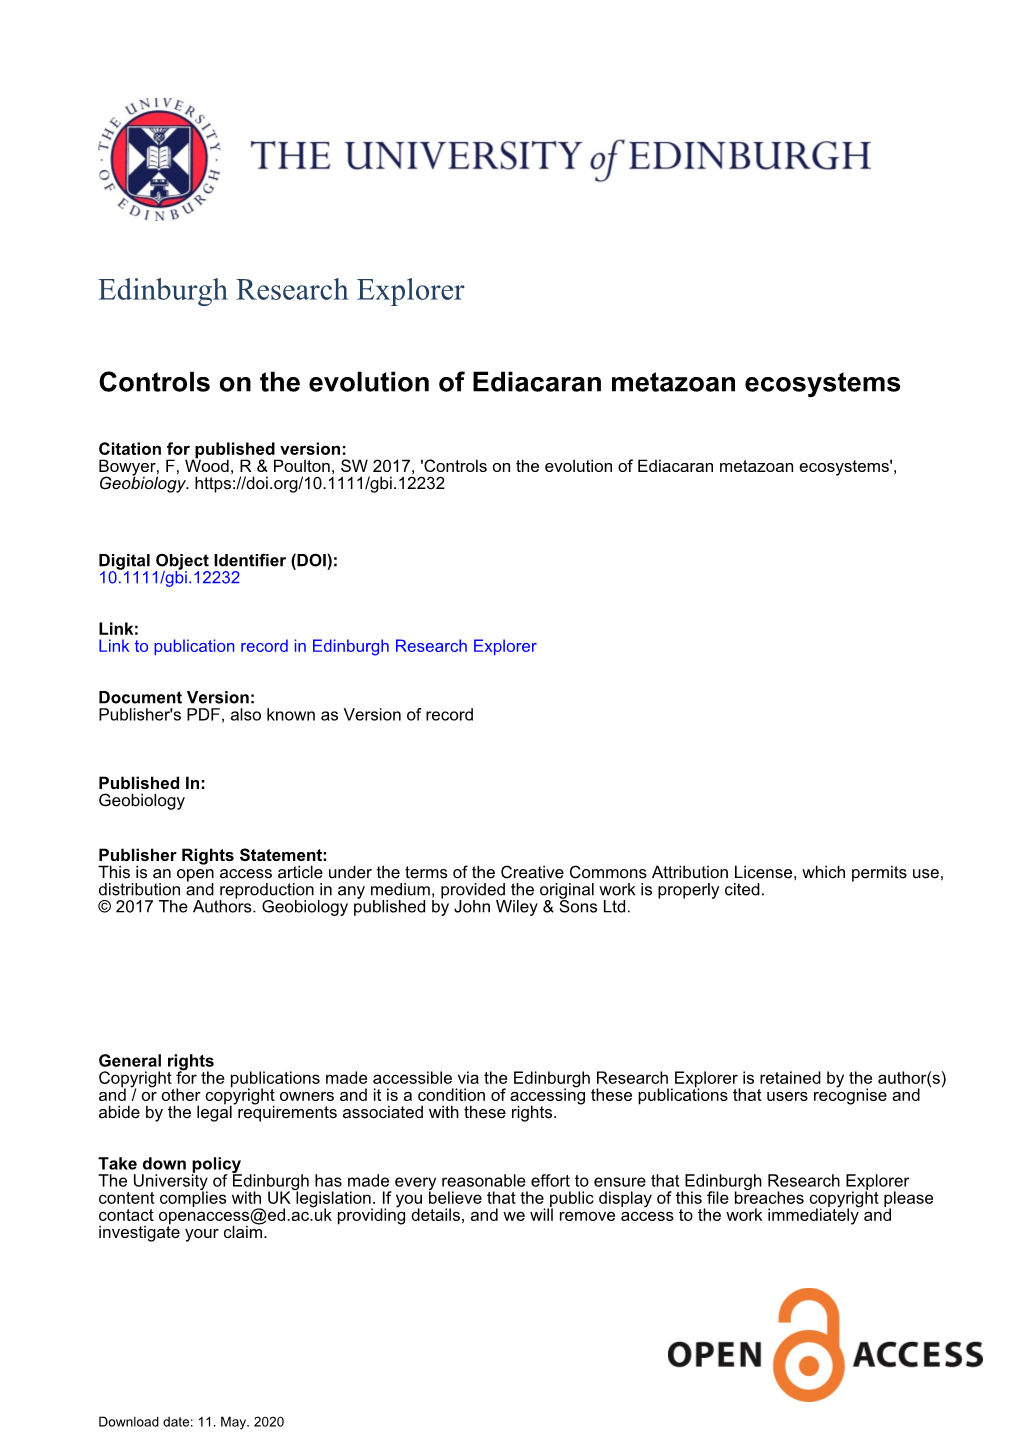 Controls on the Evolution of Ediacaran Metazoan Ecosystems